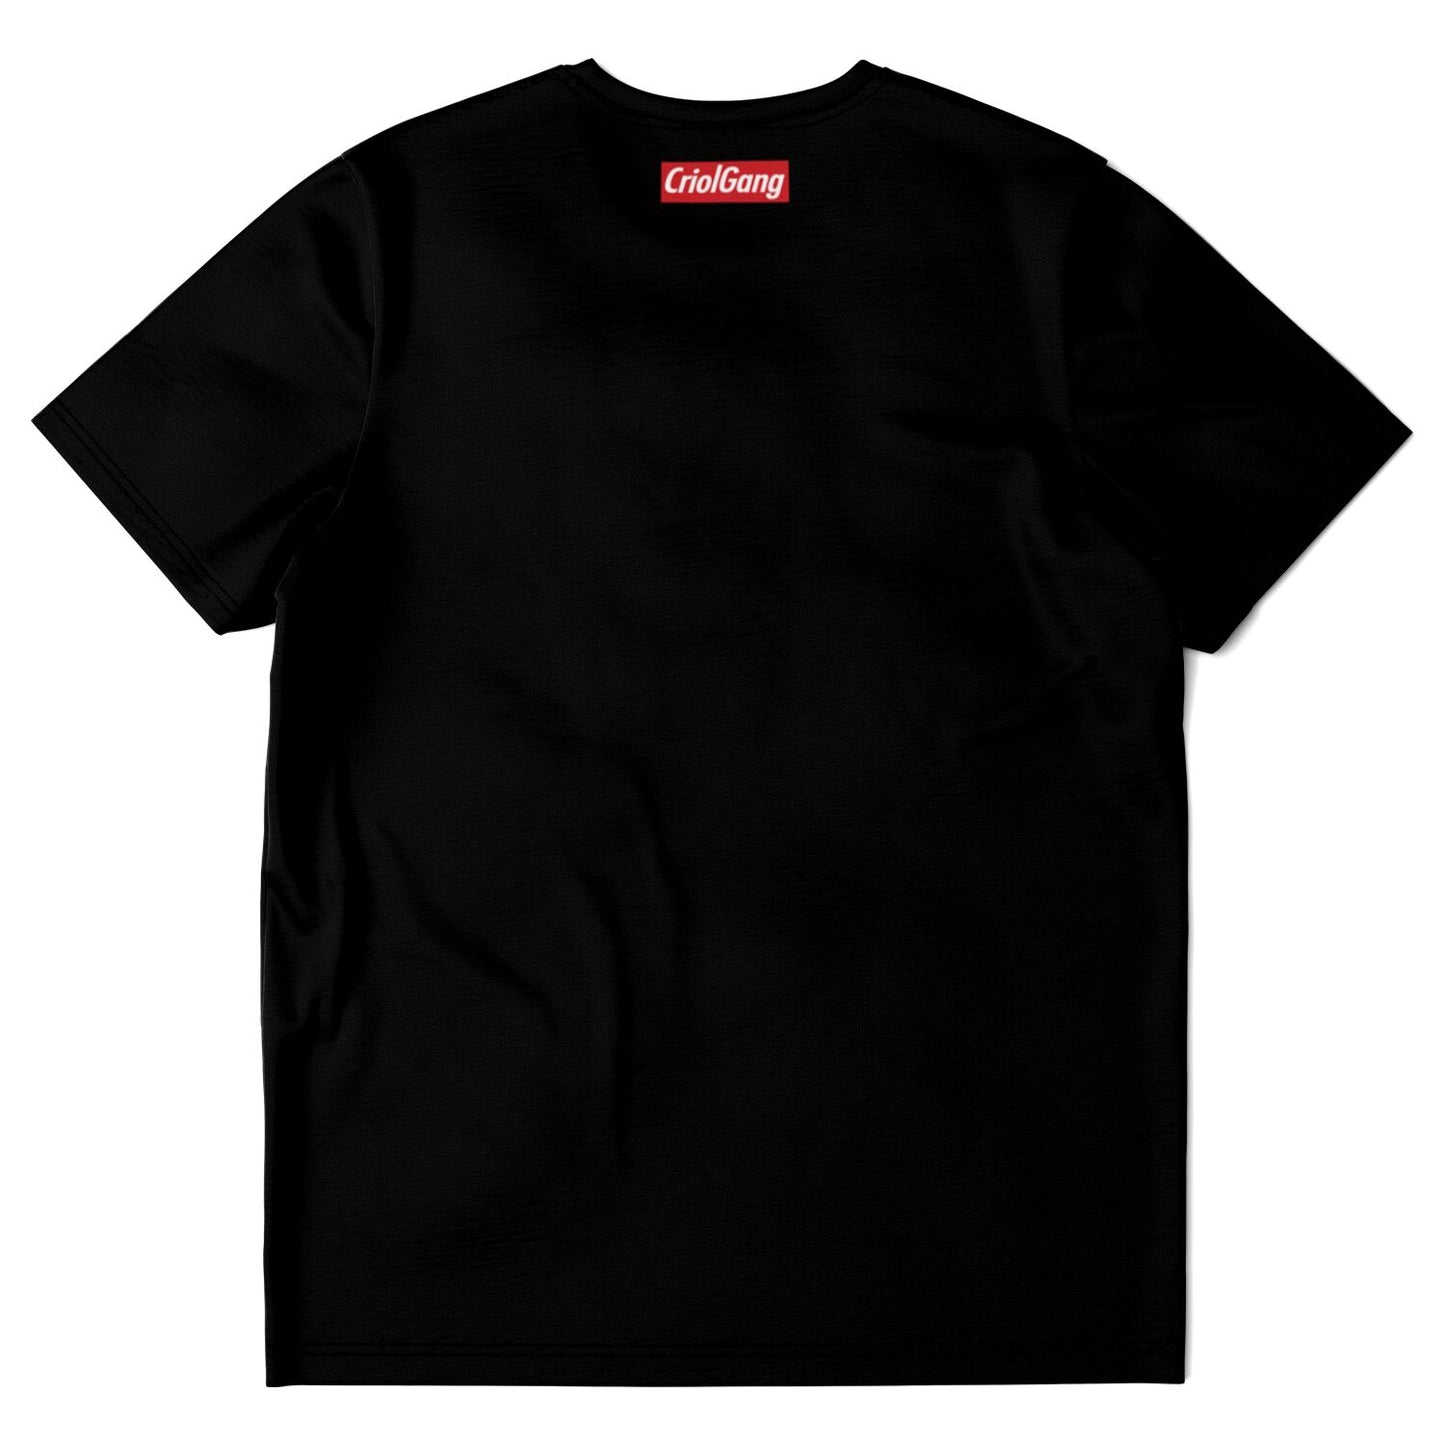 Kriola Queen T-shirt black